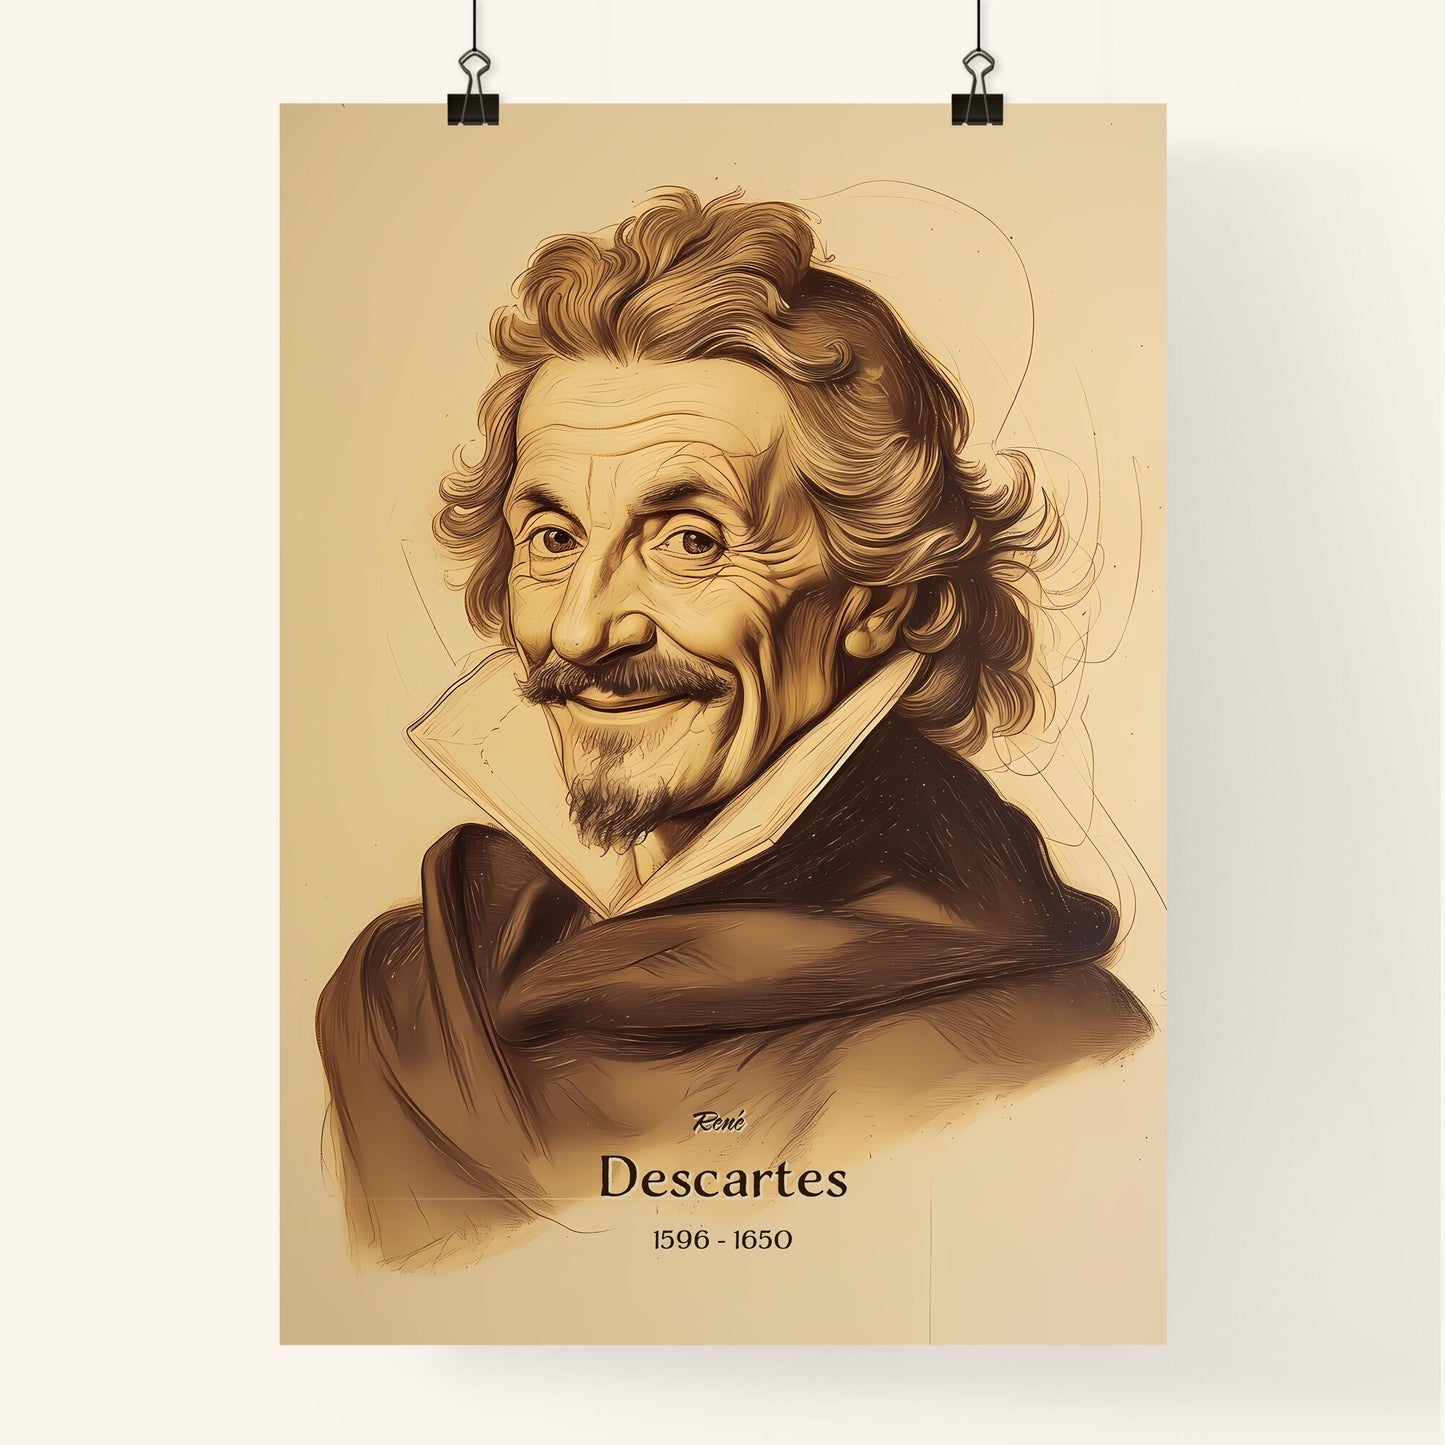 René, Descartes, 1596 - 1650, A Poster of a drawing of a man Default Title